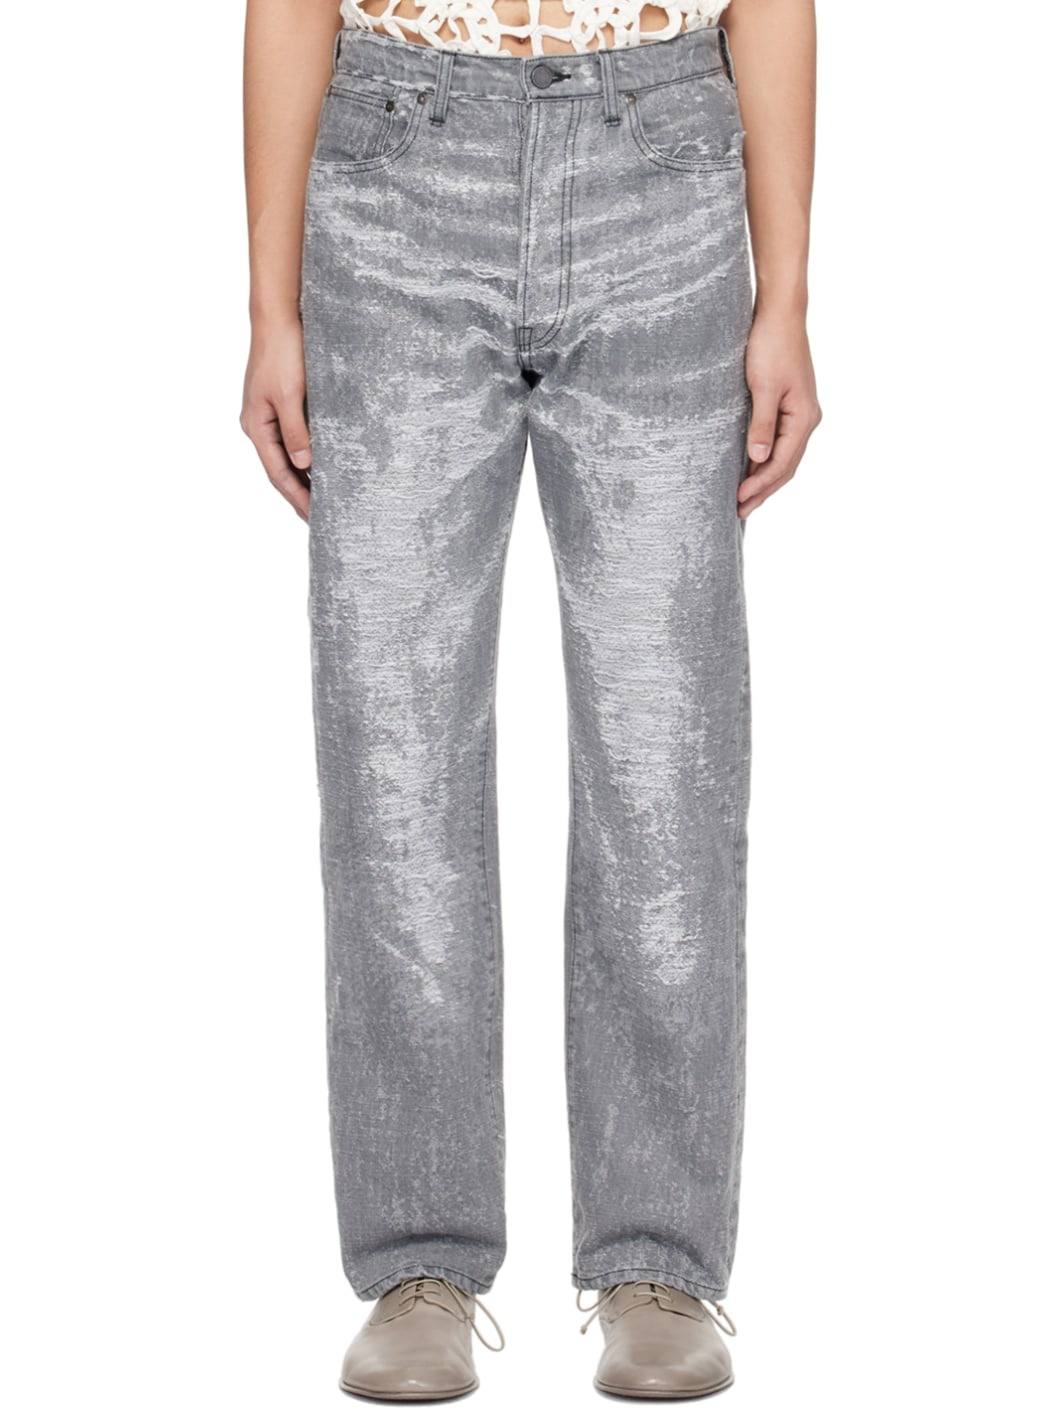 Gray Type 0 Jeans - 1